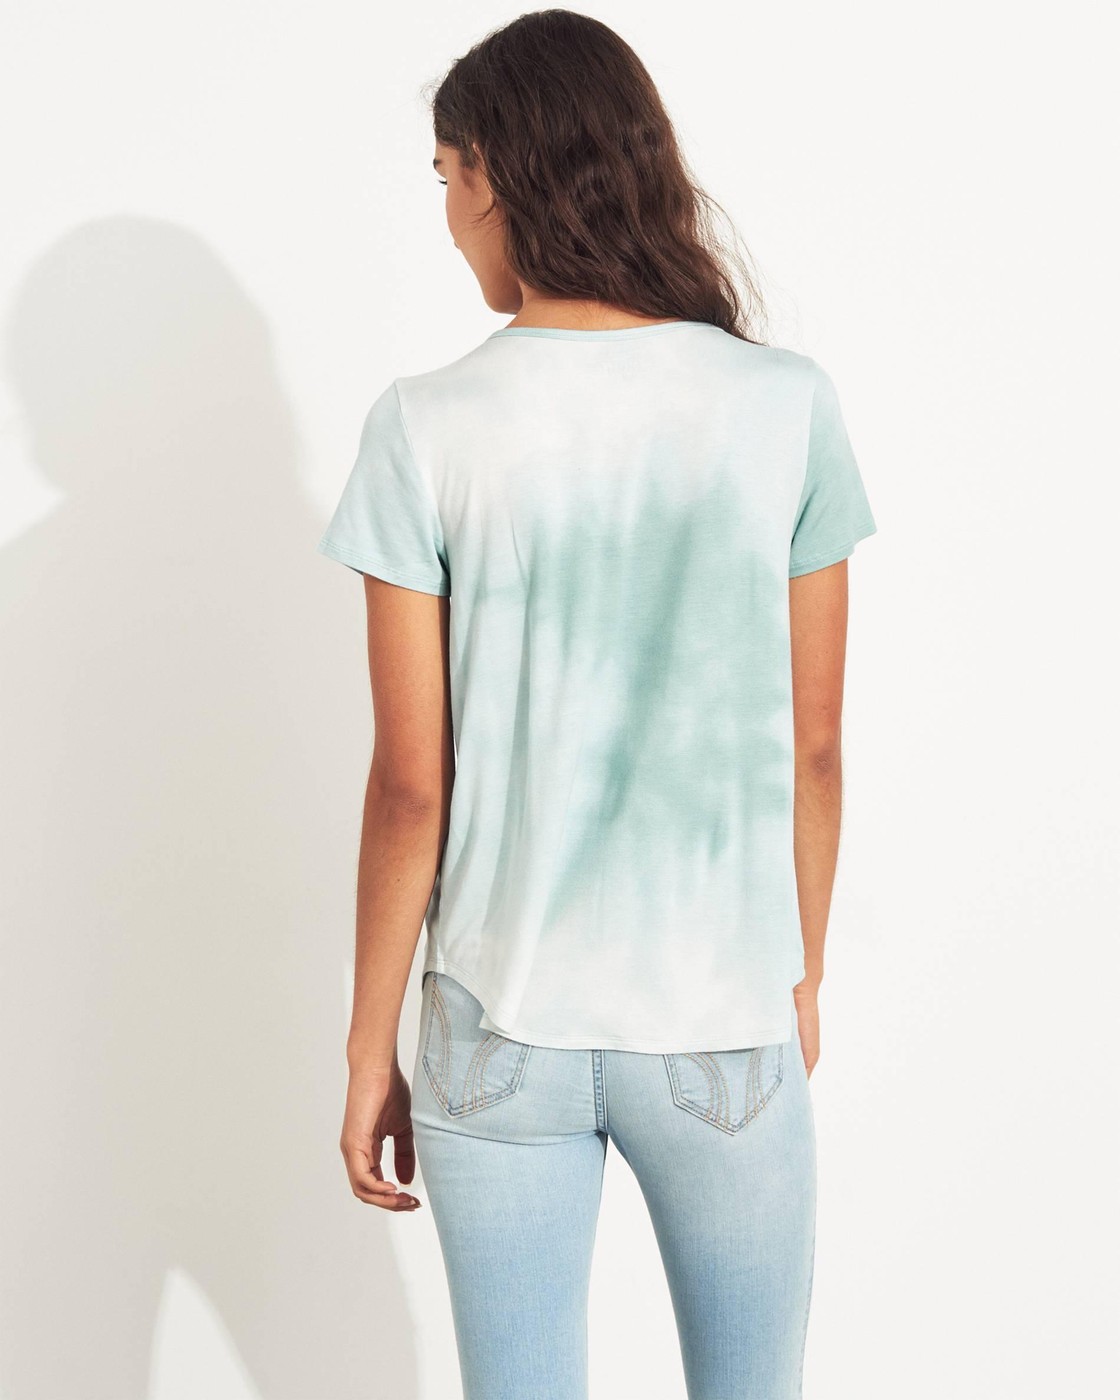 Голубая футболка - женская футболка Hollister, S, S